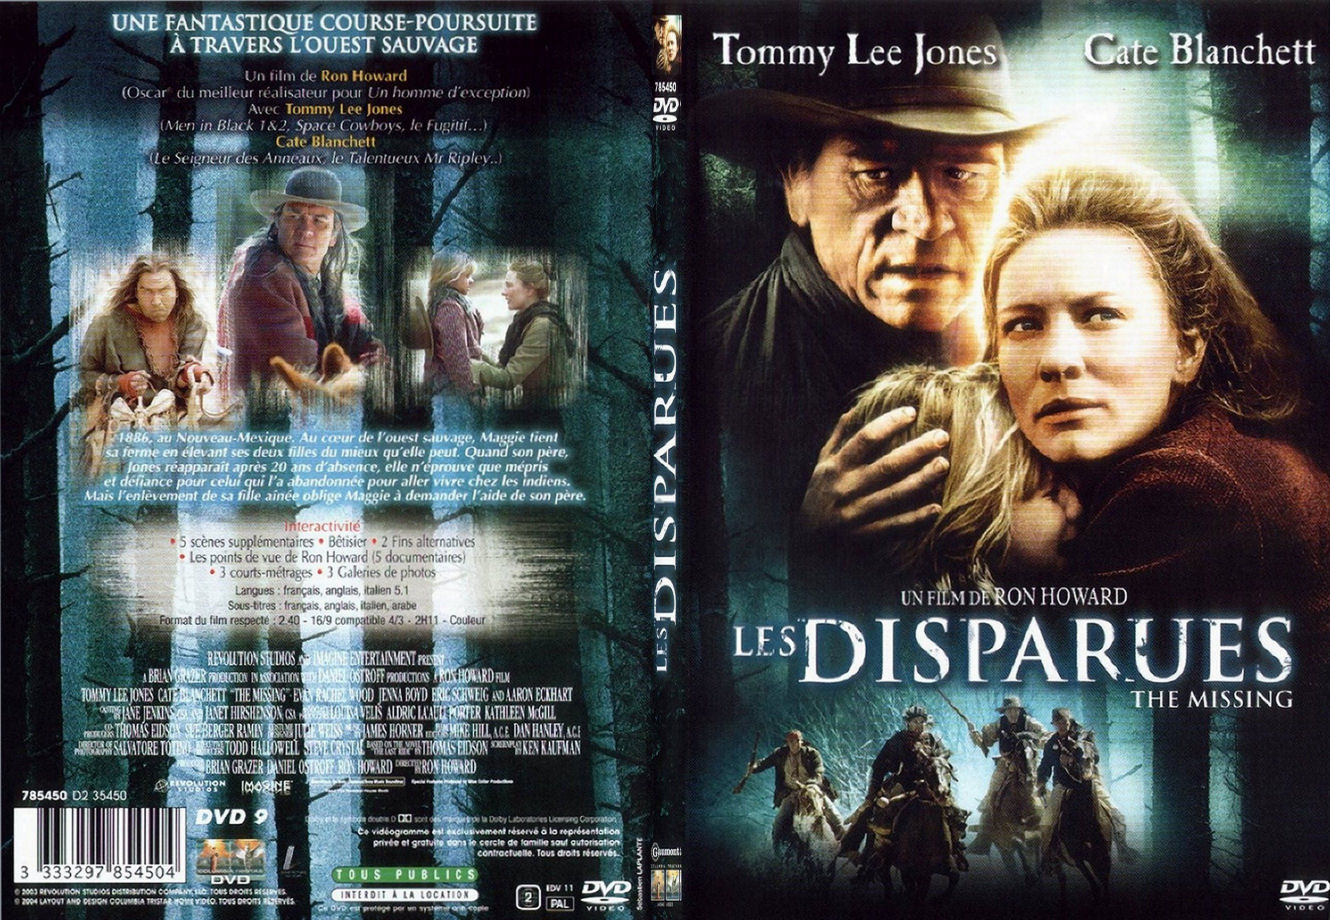 Jaquette DVD Les disparues - SLIM